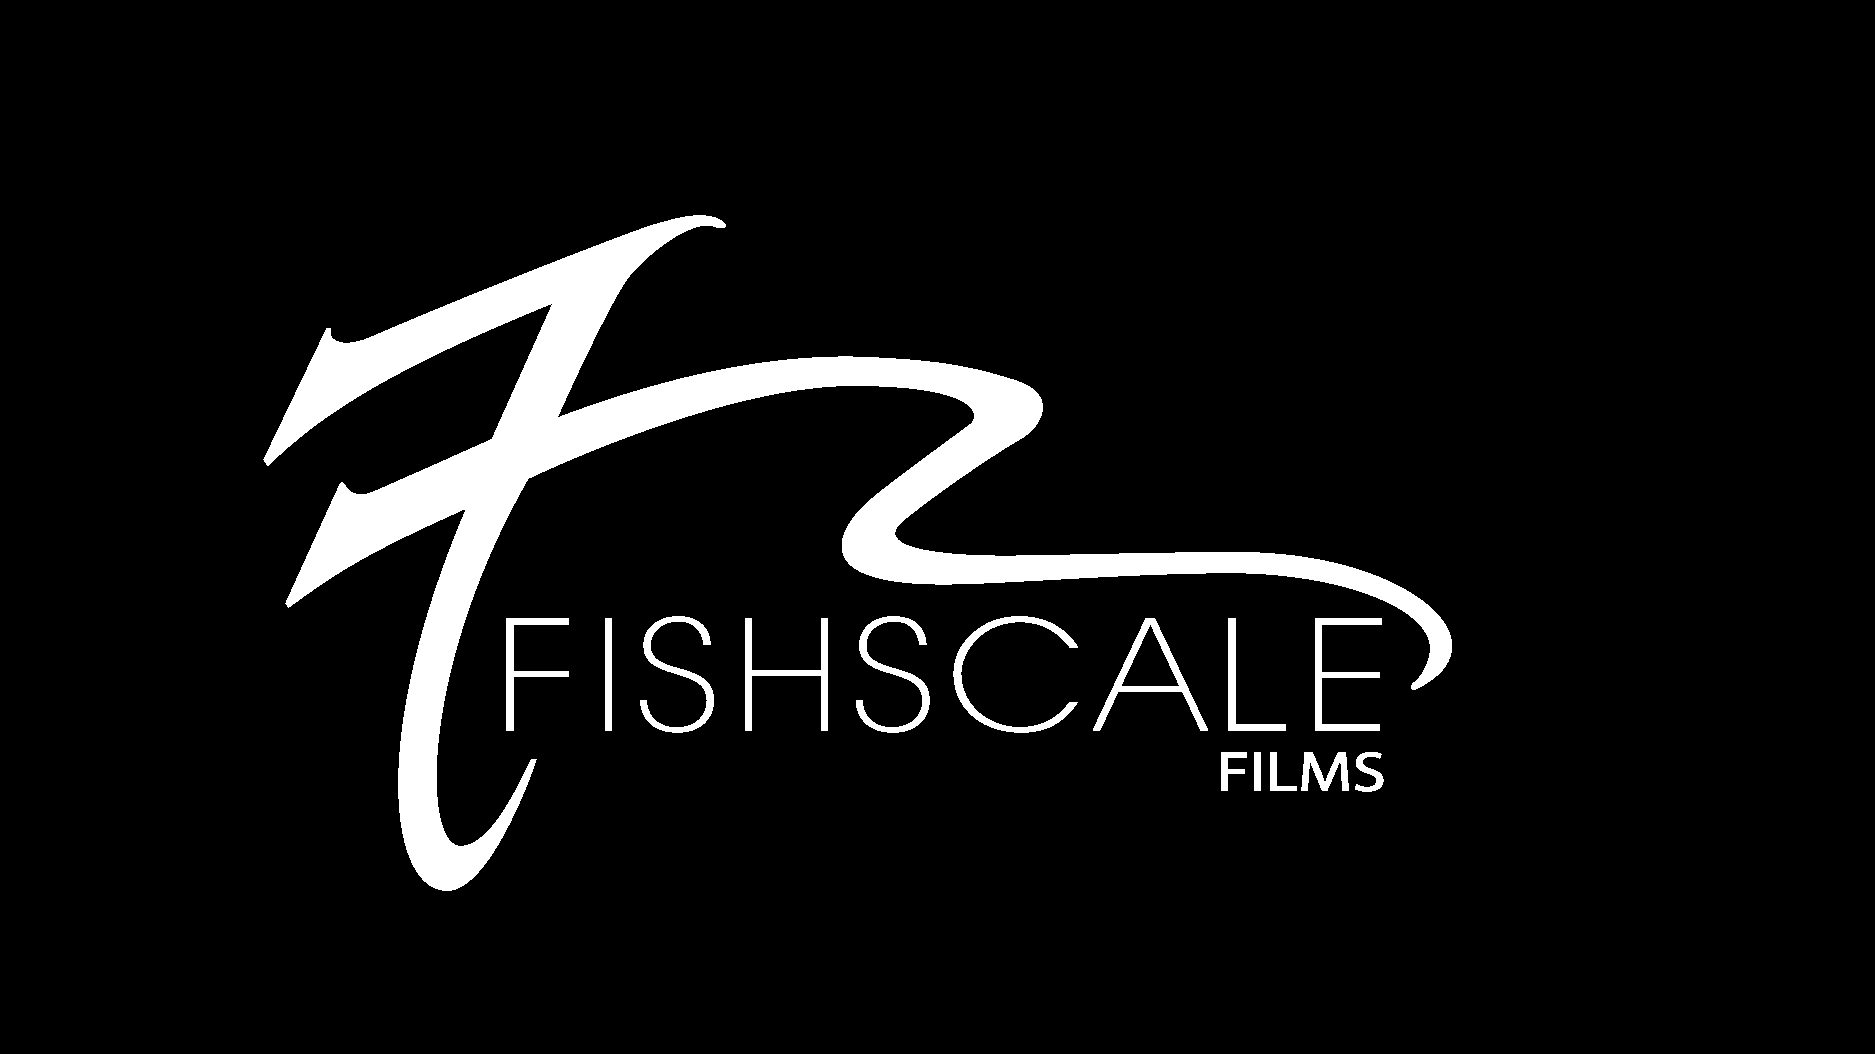 Fishscale Films Logo Vector